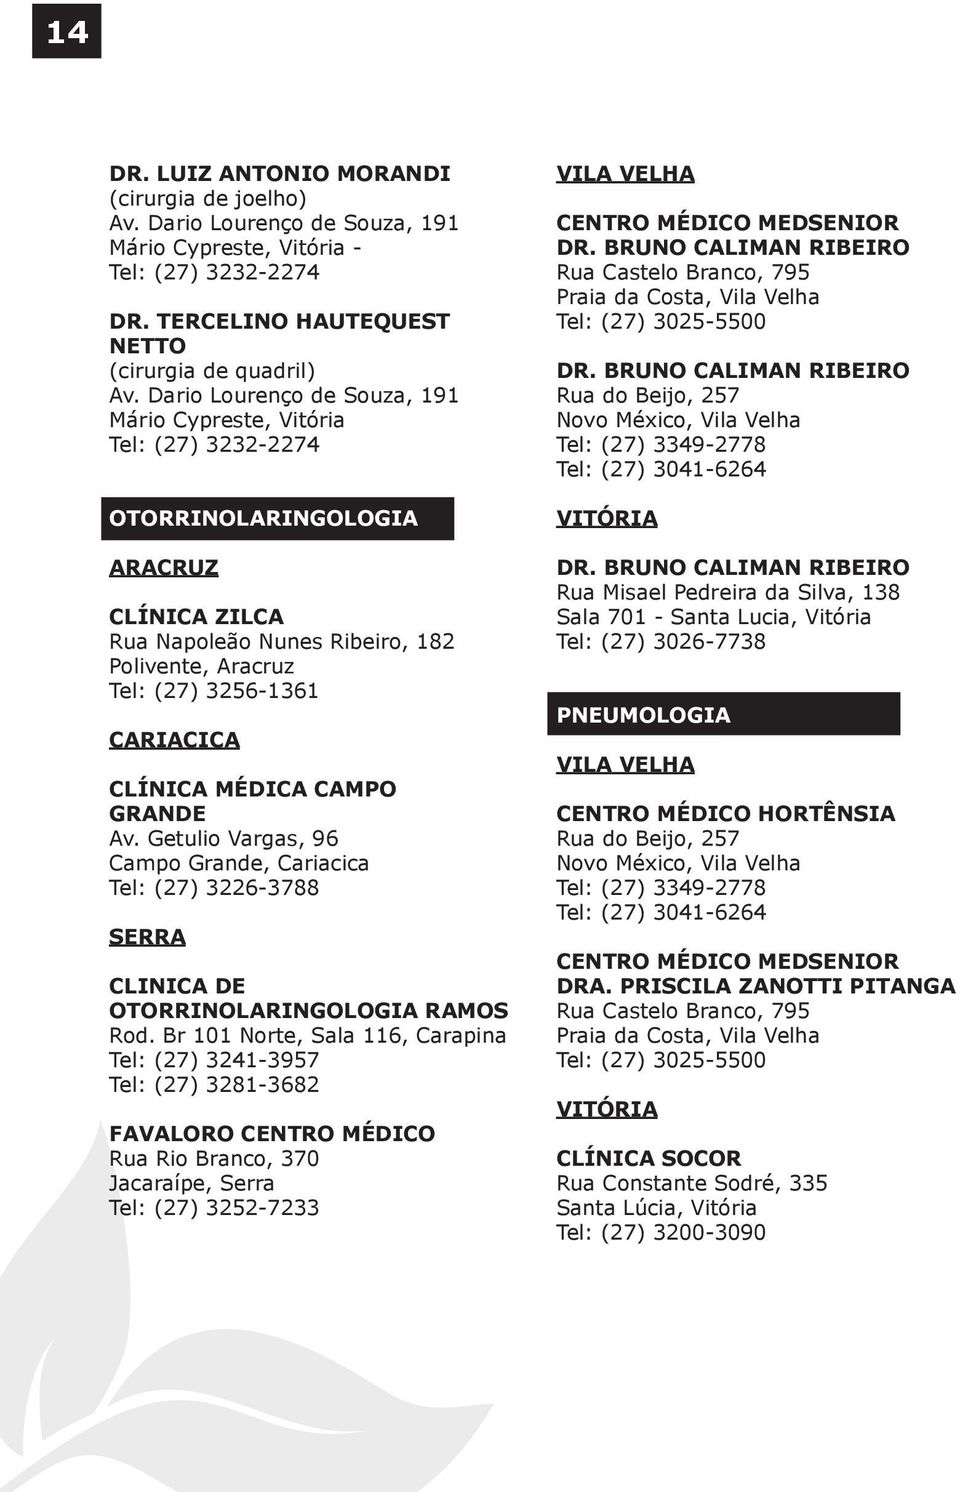 Grande Av. Getulio Vargas, 96 Tel: (27) 3226-3788 CLINICA DE OTORRINOLARINGOLOGIA RAMOS Rod.